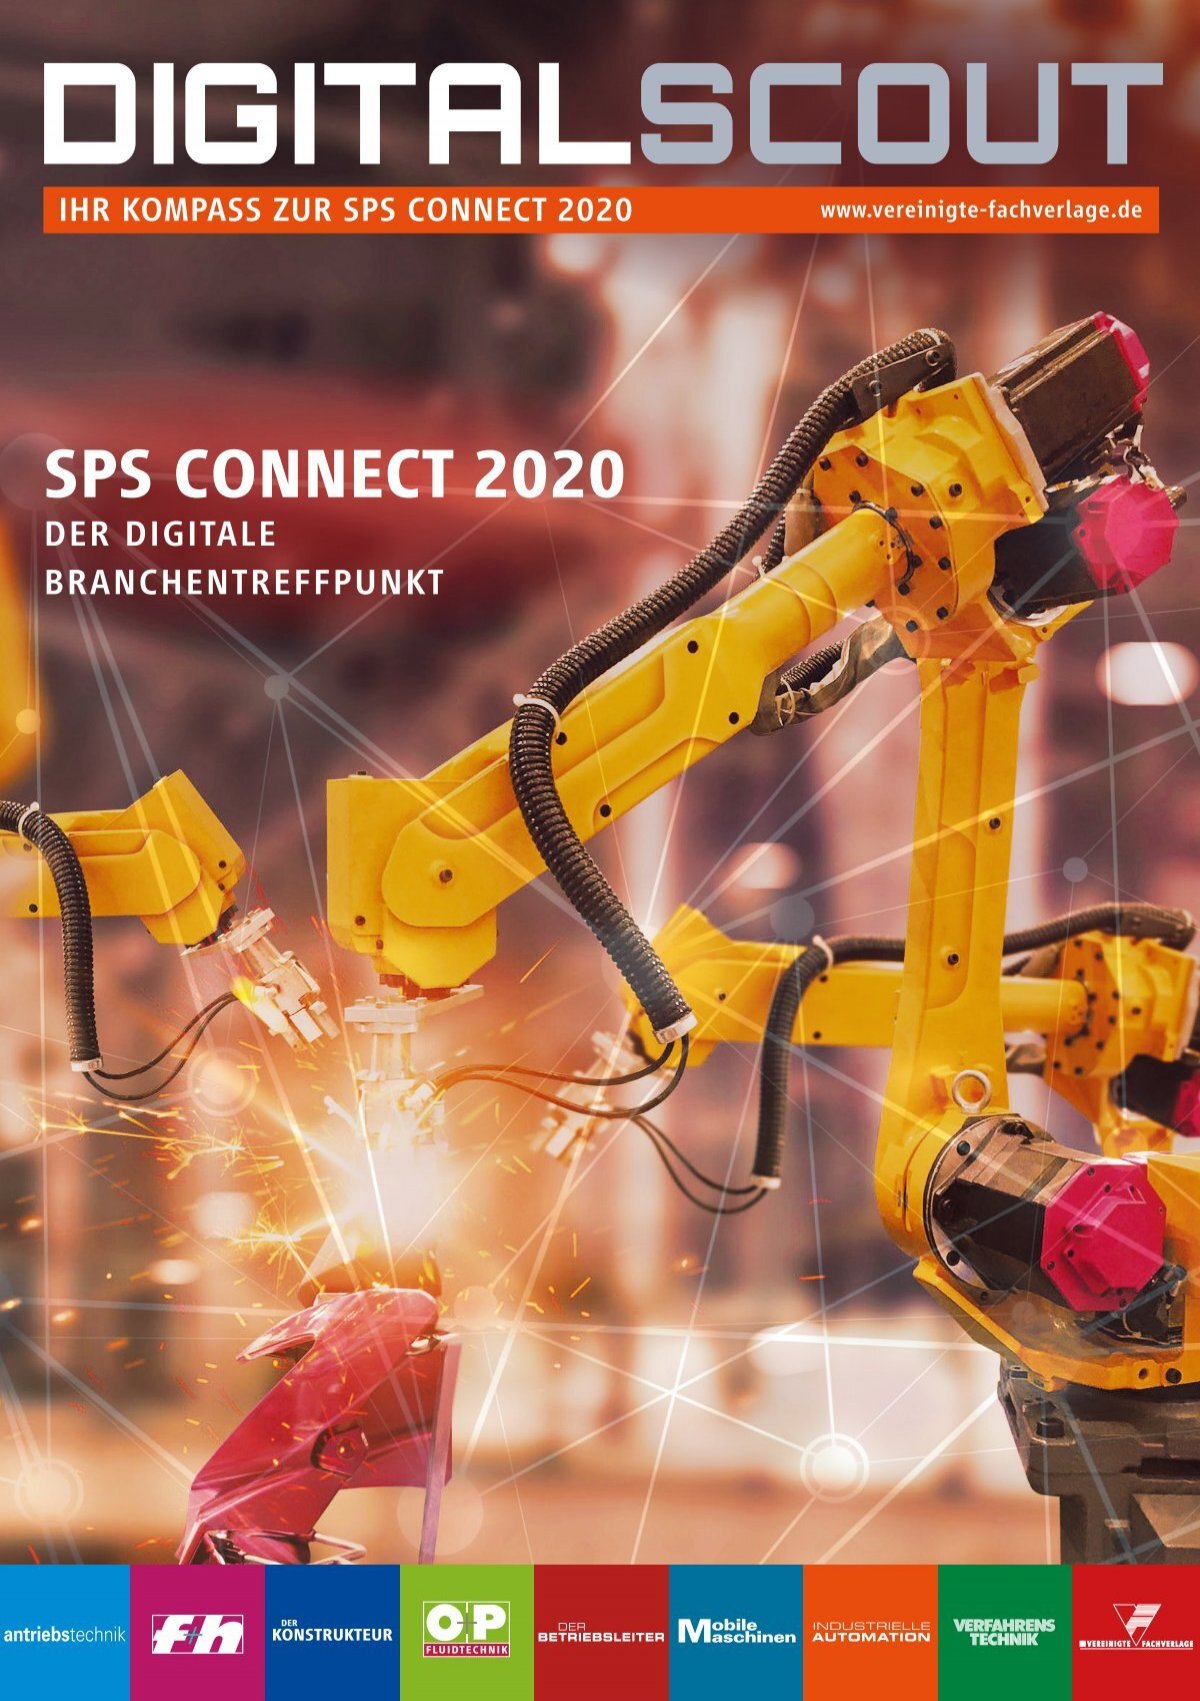 Digital Scout SPS connect 2020